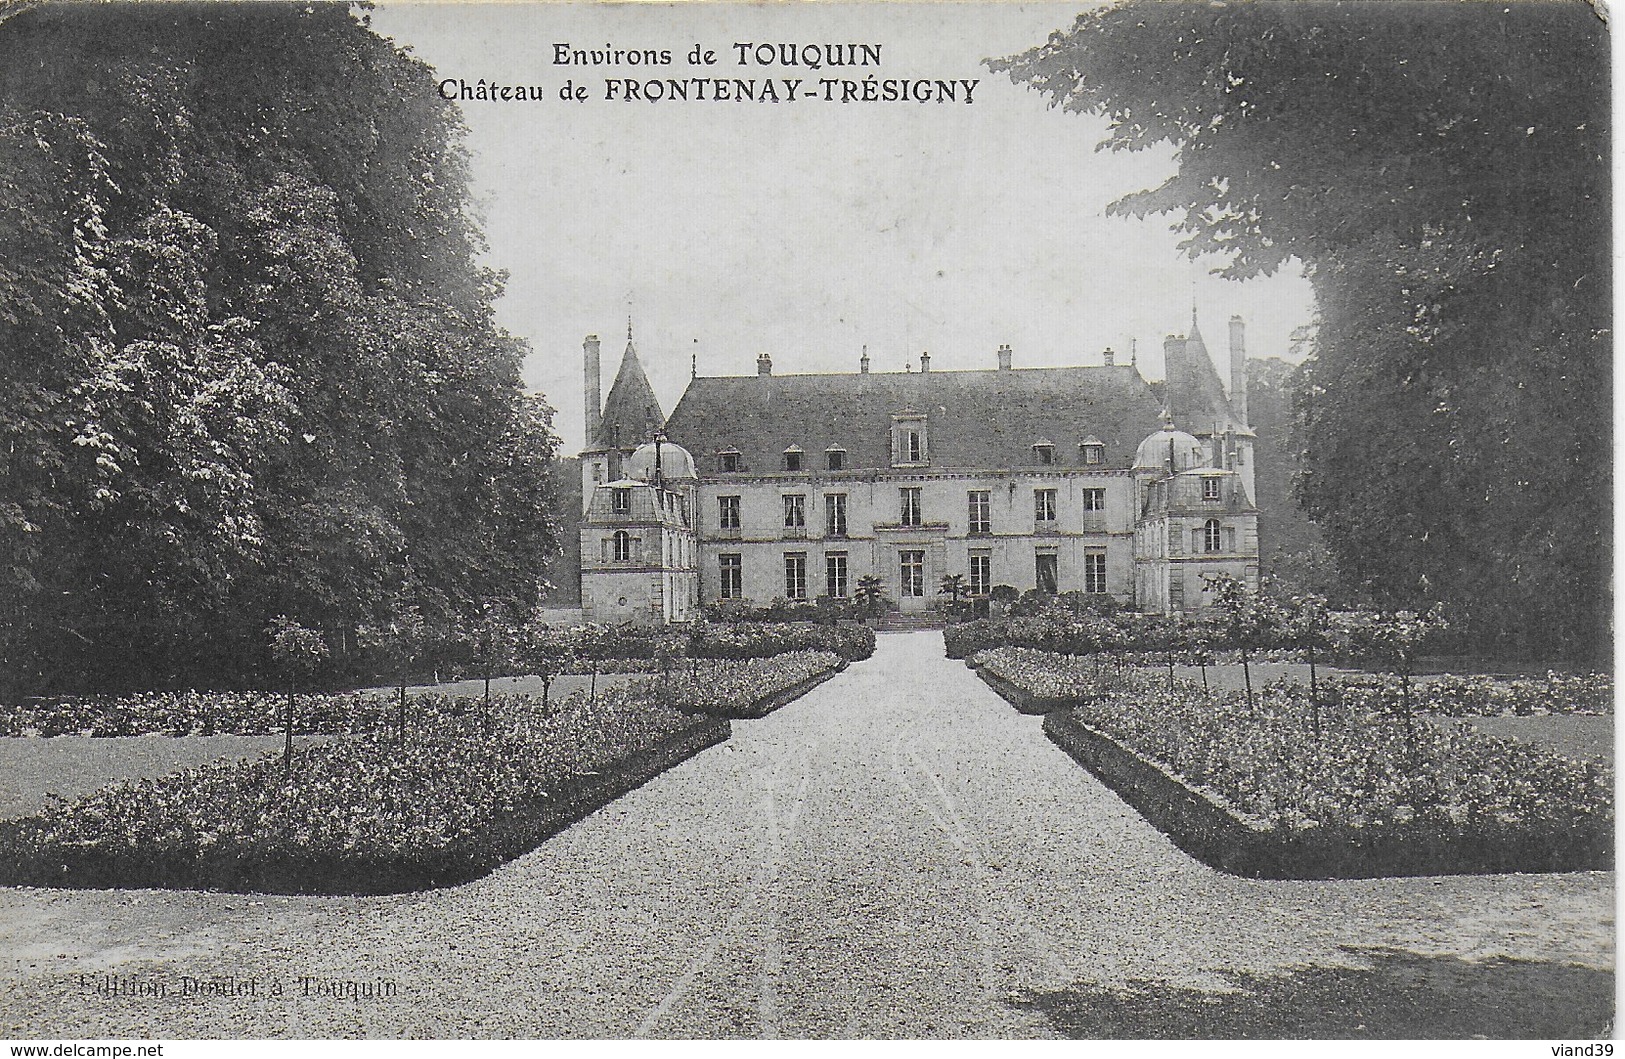 Touquin - (Environs) : Château De Frontenay Tresigny - Carte écrite Datée Du 30 Juin 1917 - Fontenay Tresigny